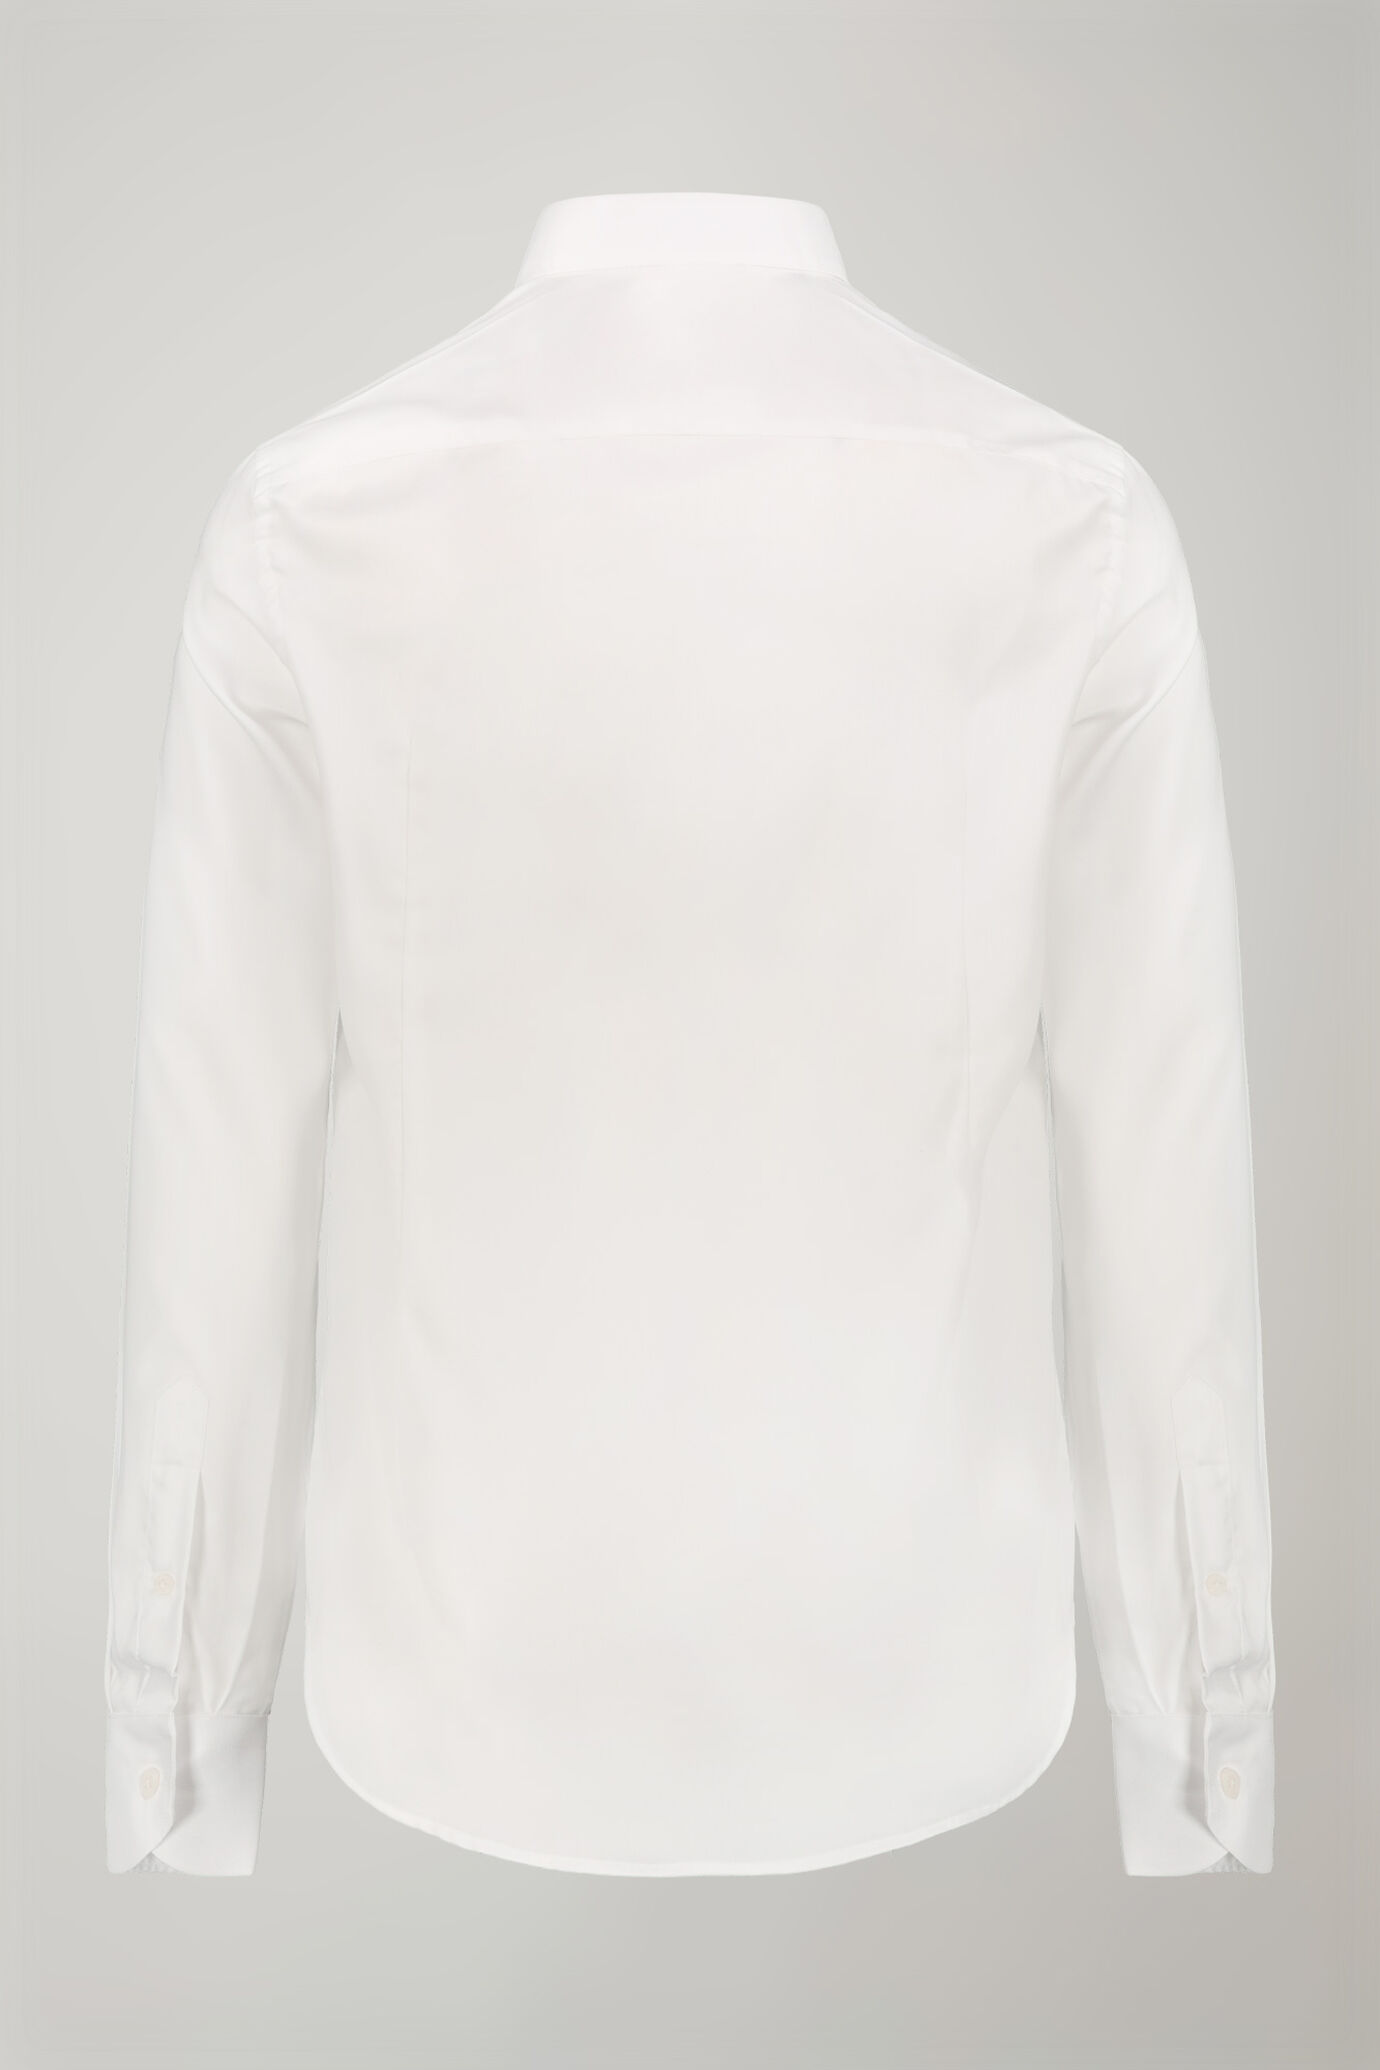 Men's shirt classic collar 100% cotton lightweight oxford fabric regular fit image number 6